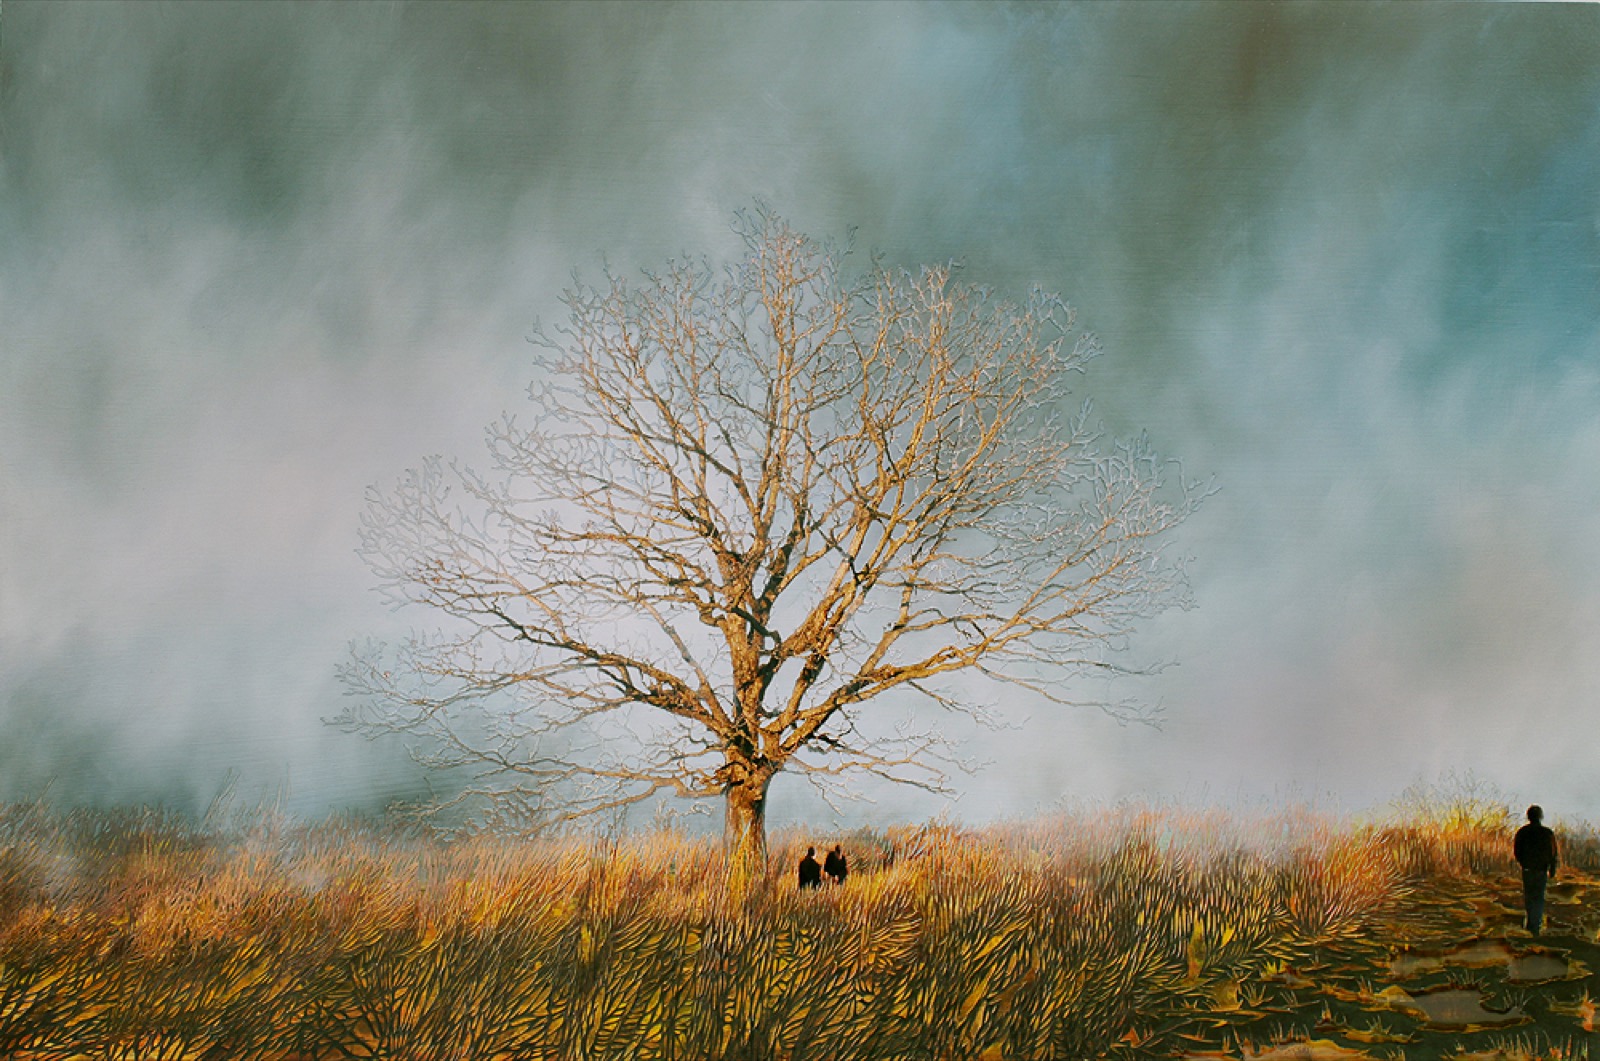 “Royal Oak” (2013) by Bradley Castellanos